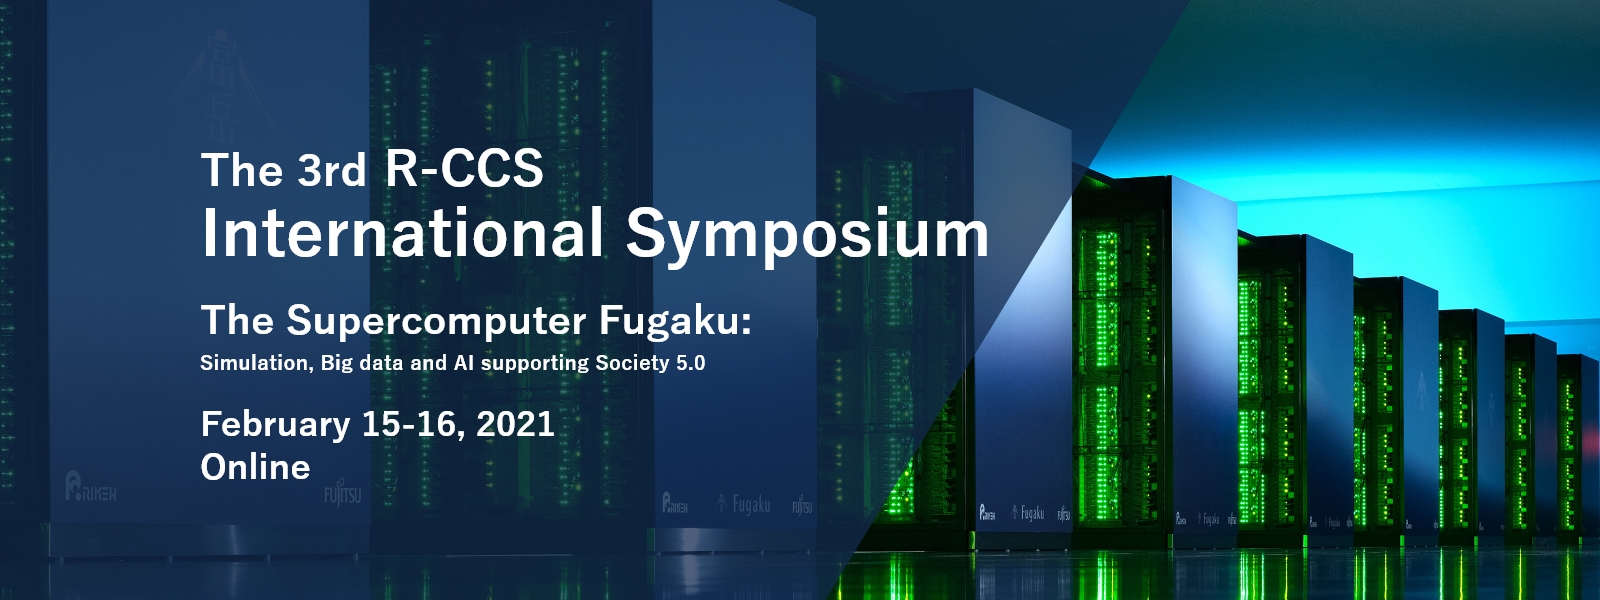 The 3rd R-CCS International Symposium